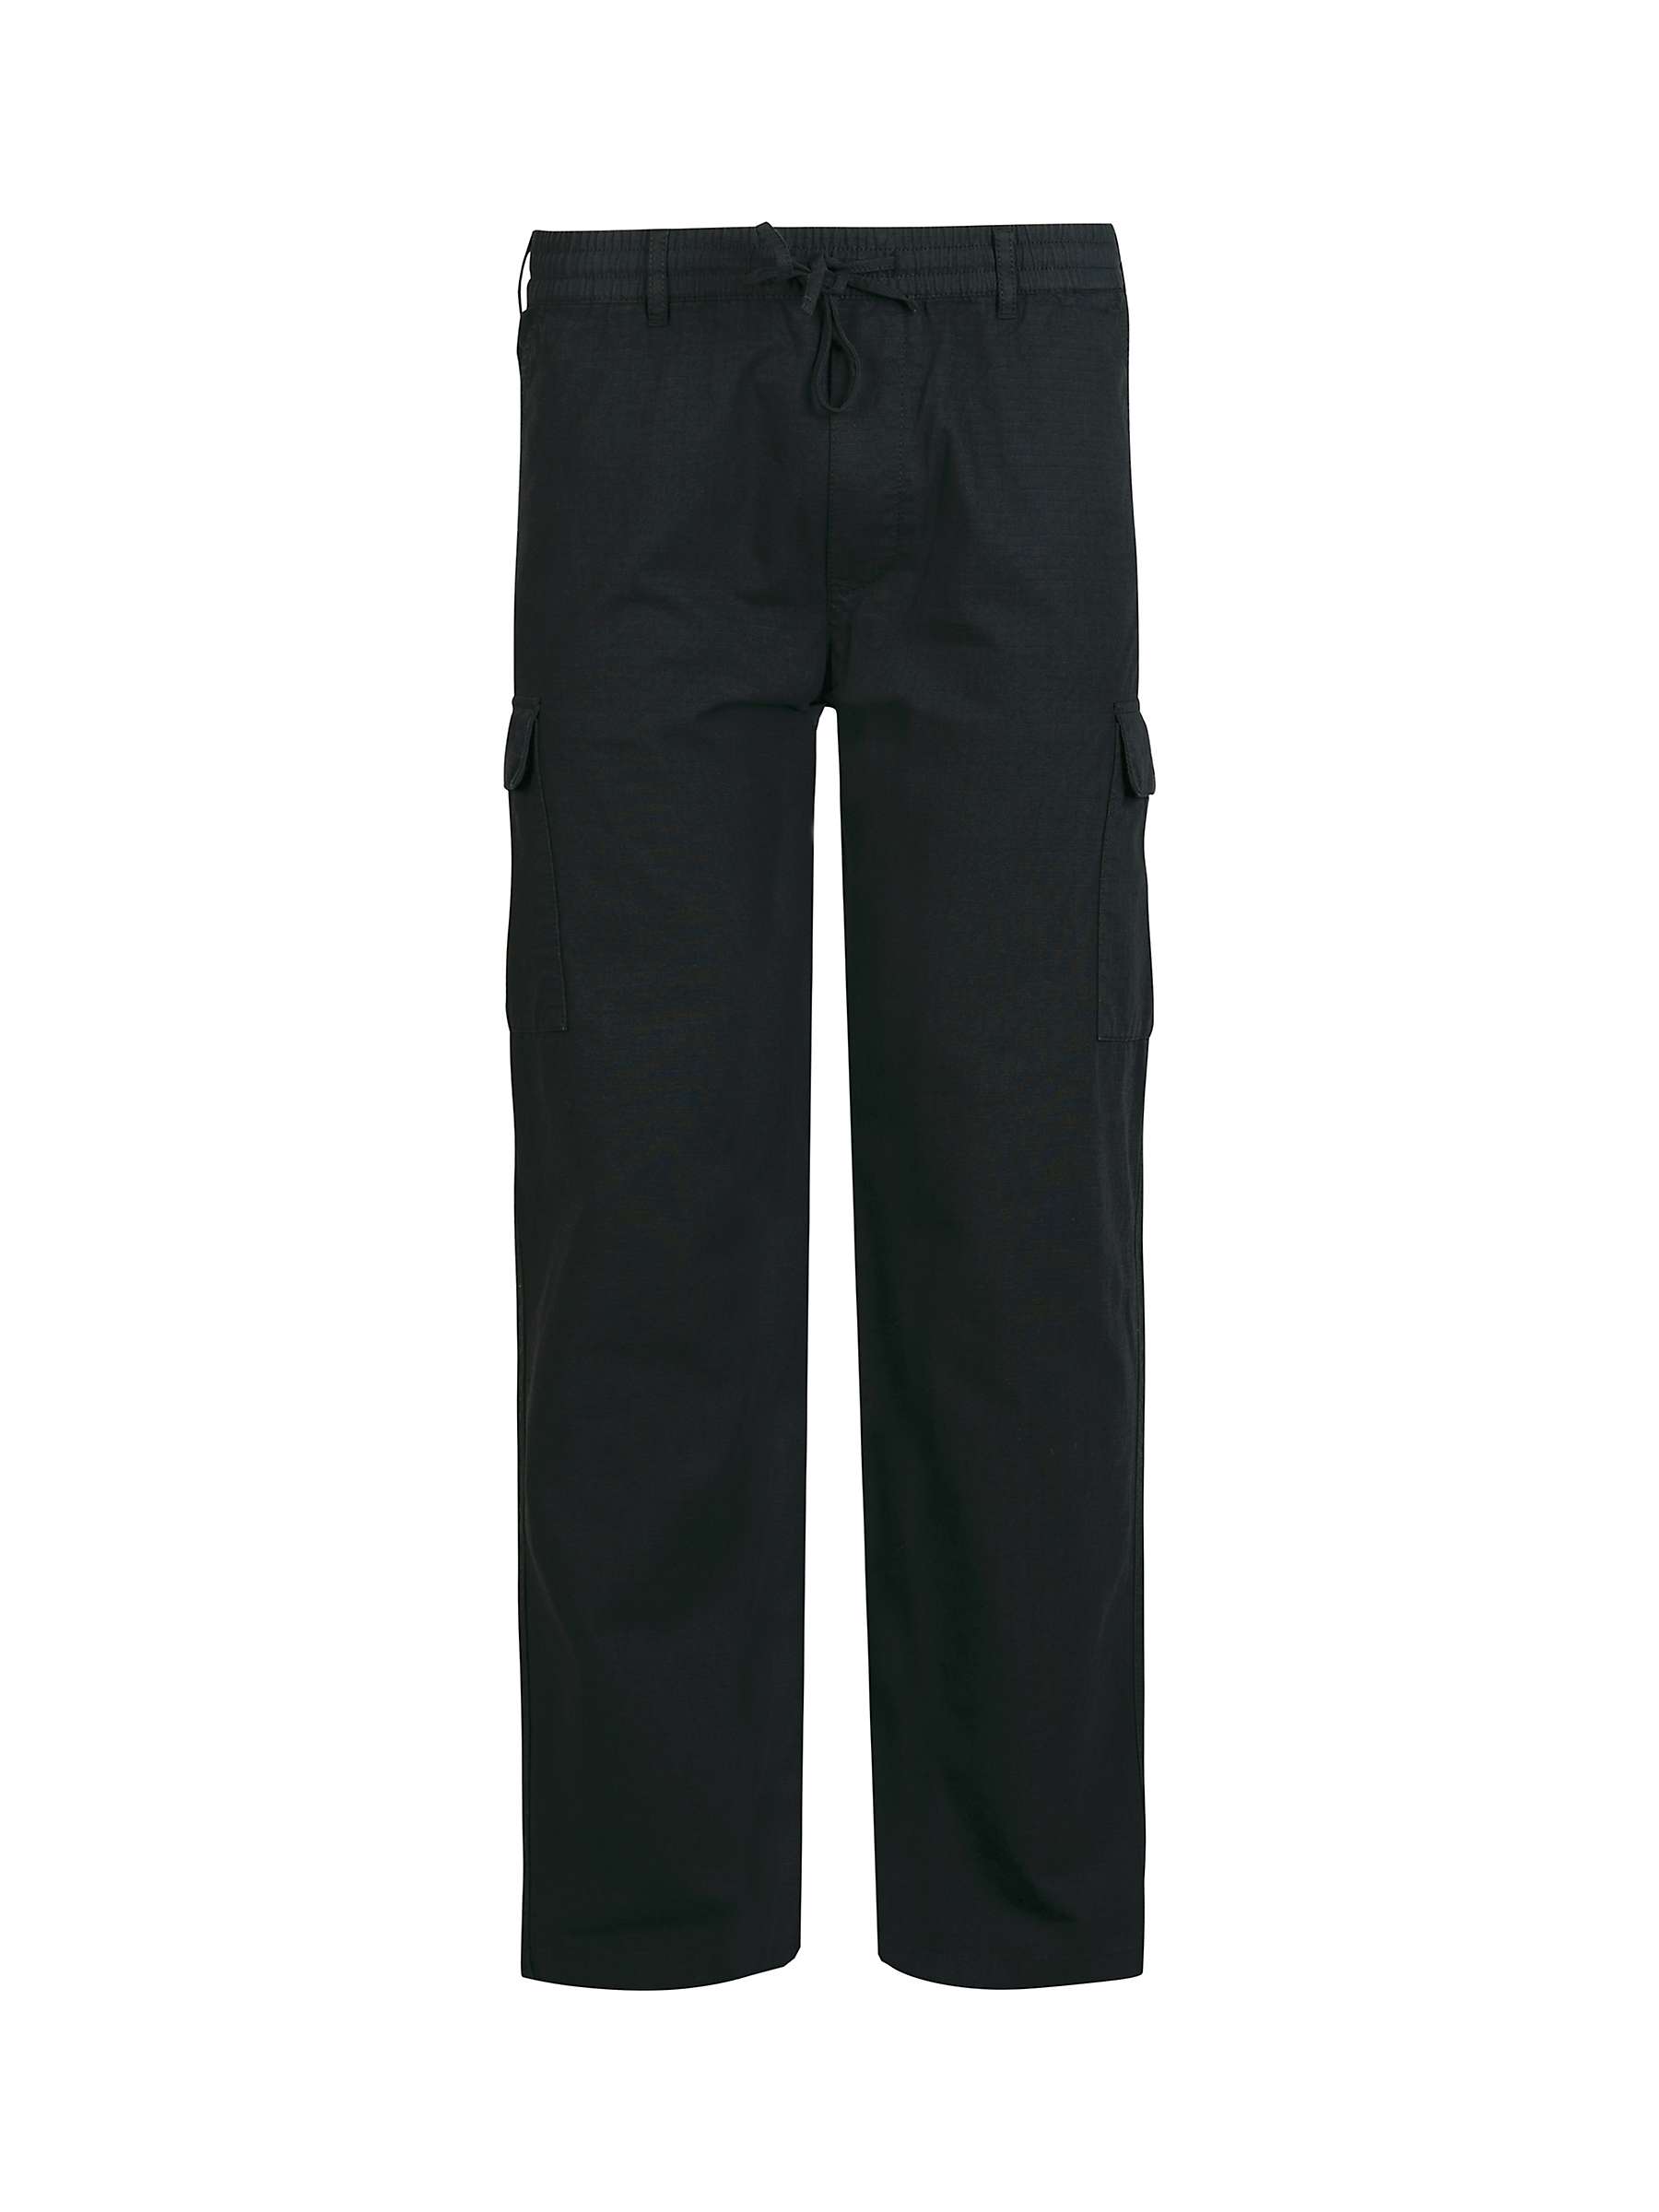 Buy Barbour International Penton Cargo Trousers, Black Online at johnlewis.com